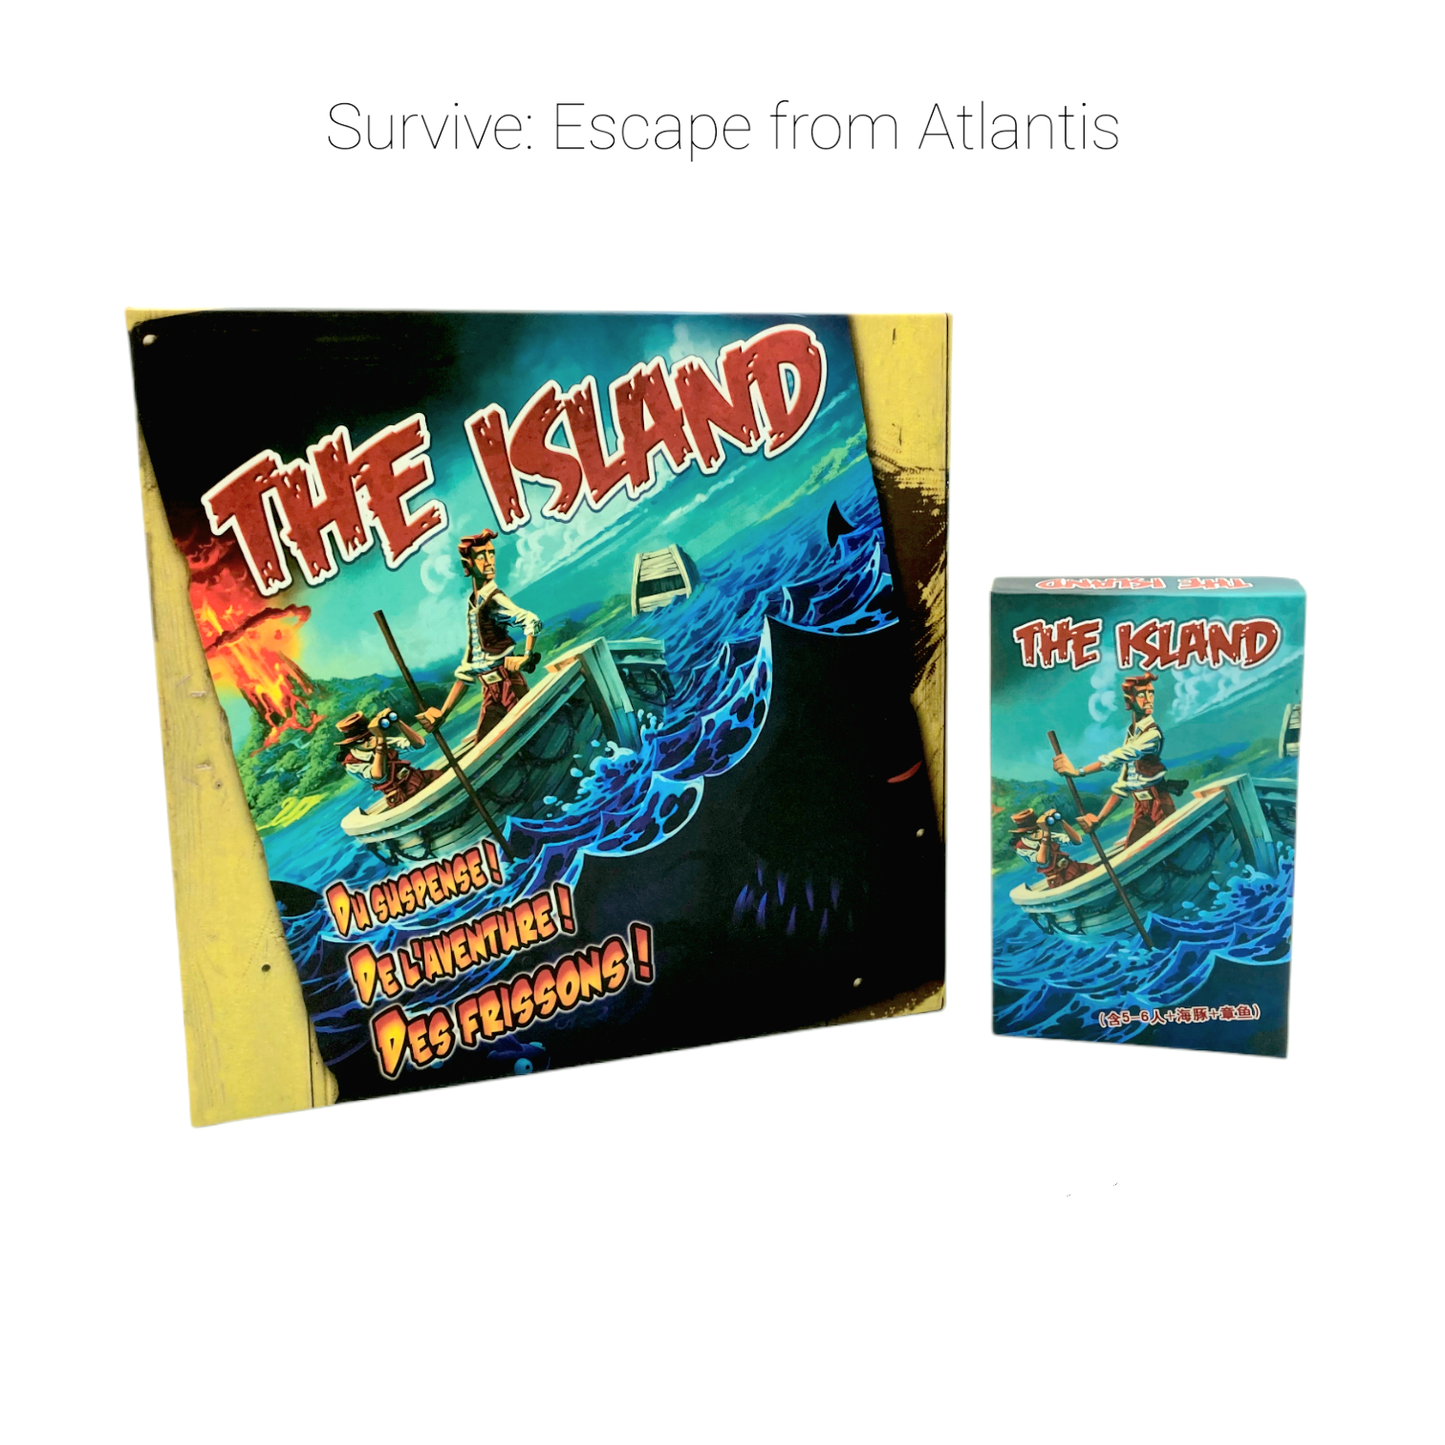 The Island (Survive: Escape from Atlantis)